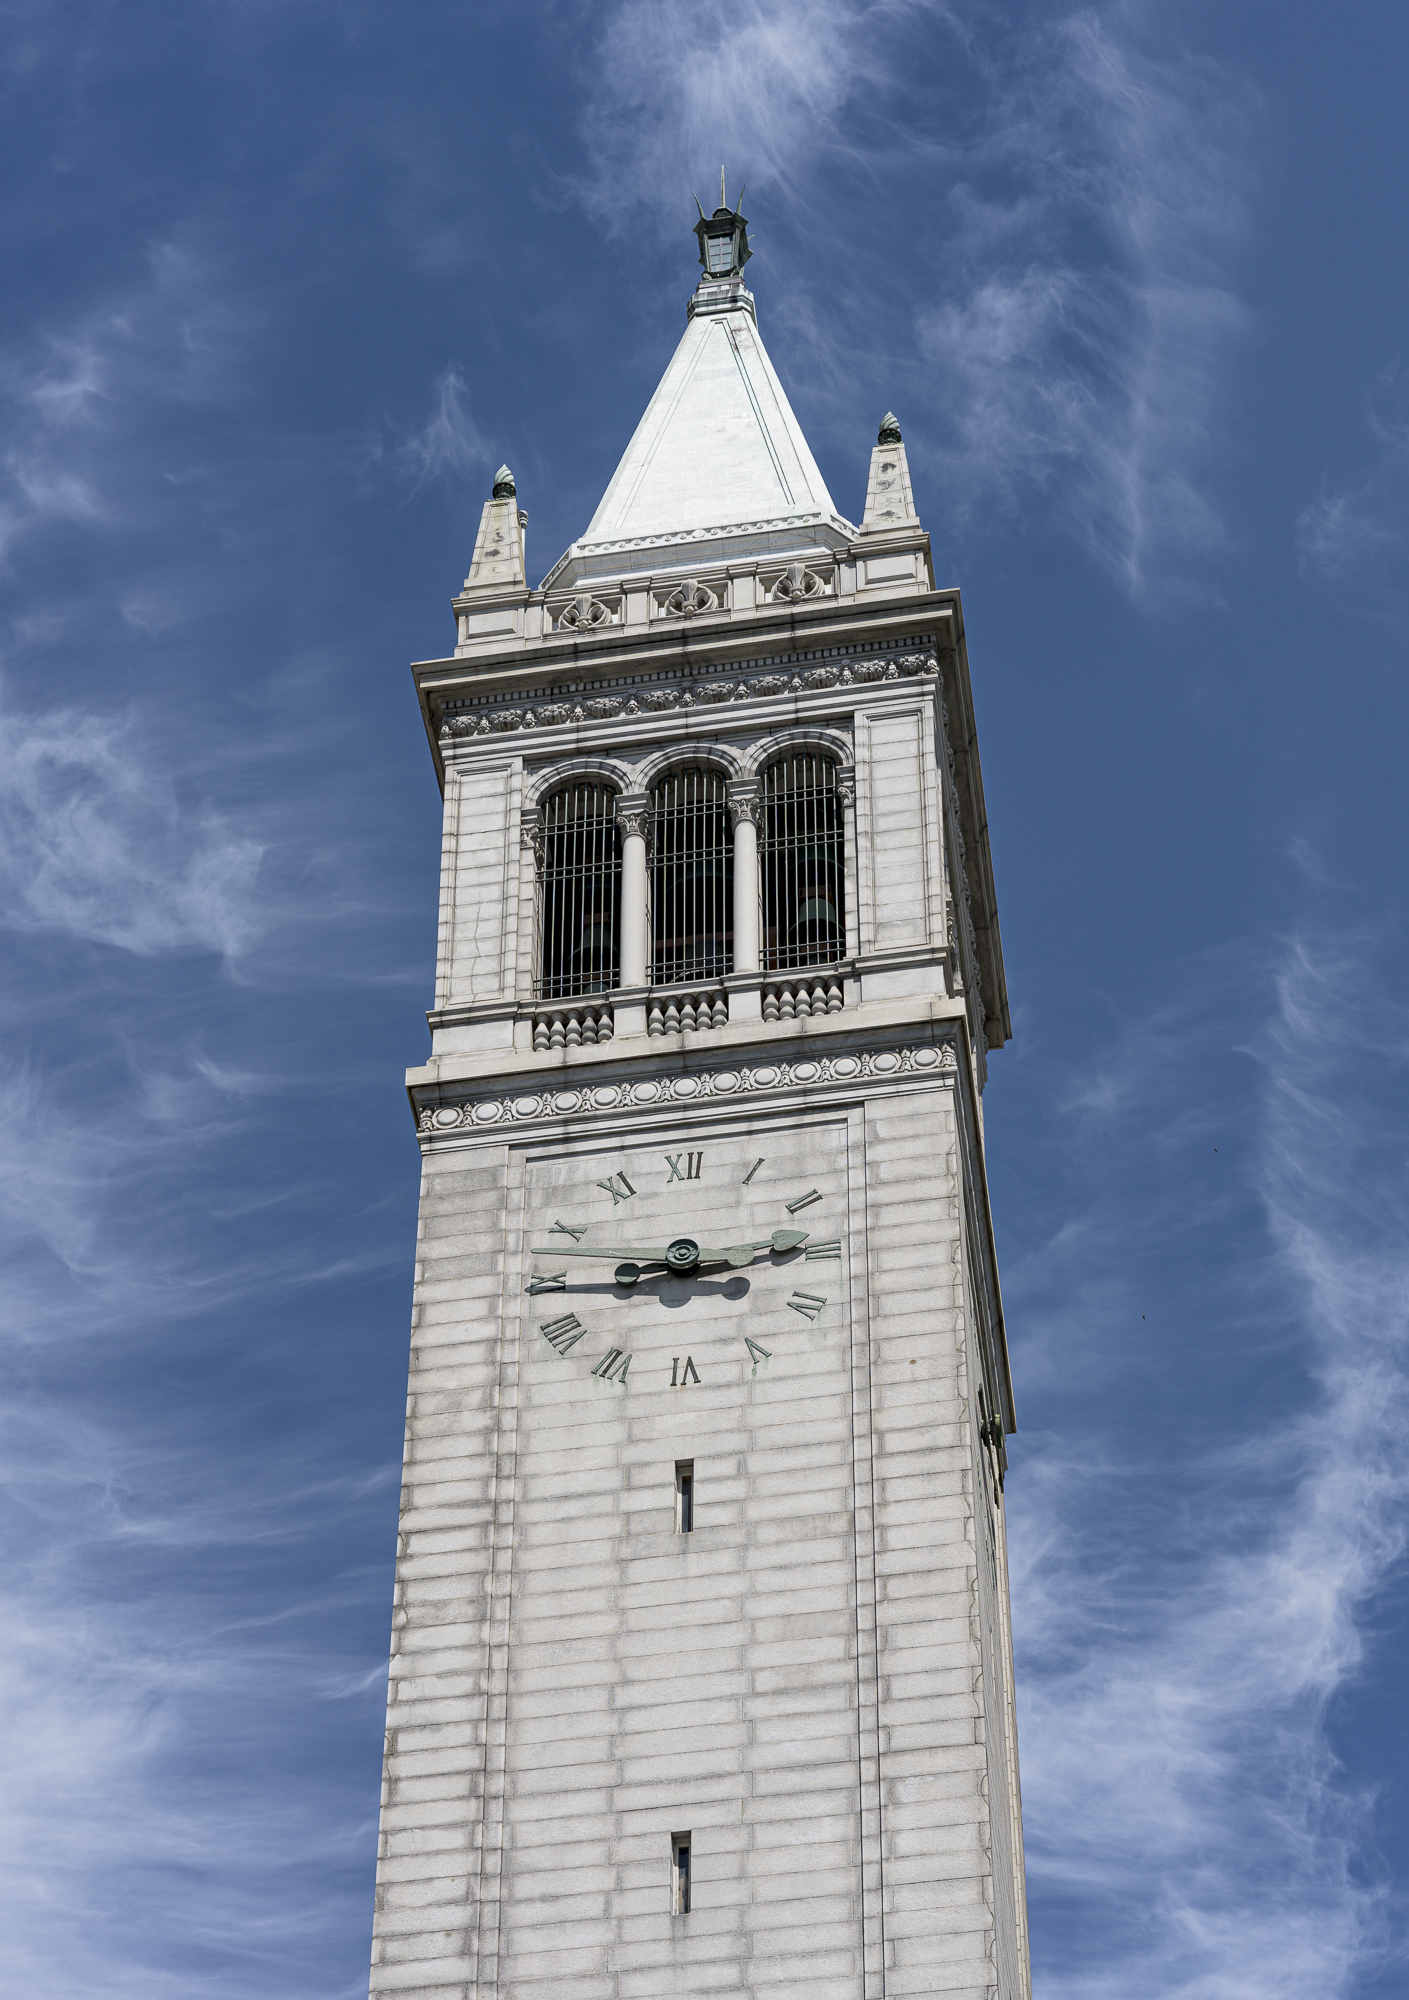 Berkeley Tower, home of Peregrine Falcons